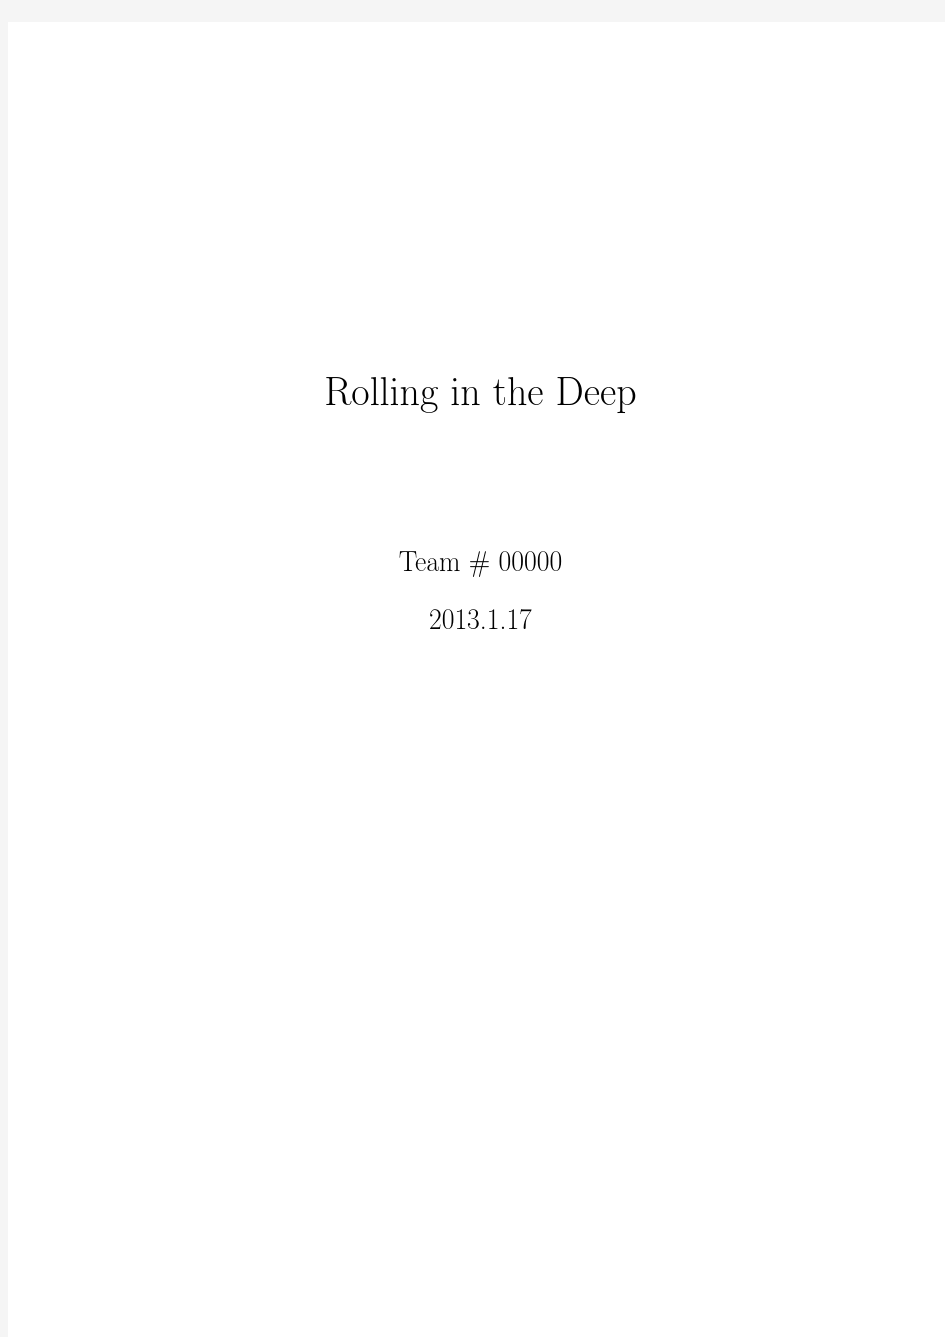 美国大学生数学建模论文-Rolling in the Deep